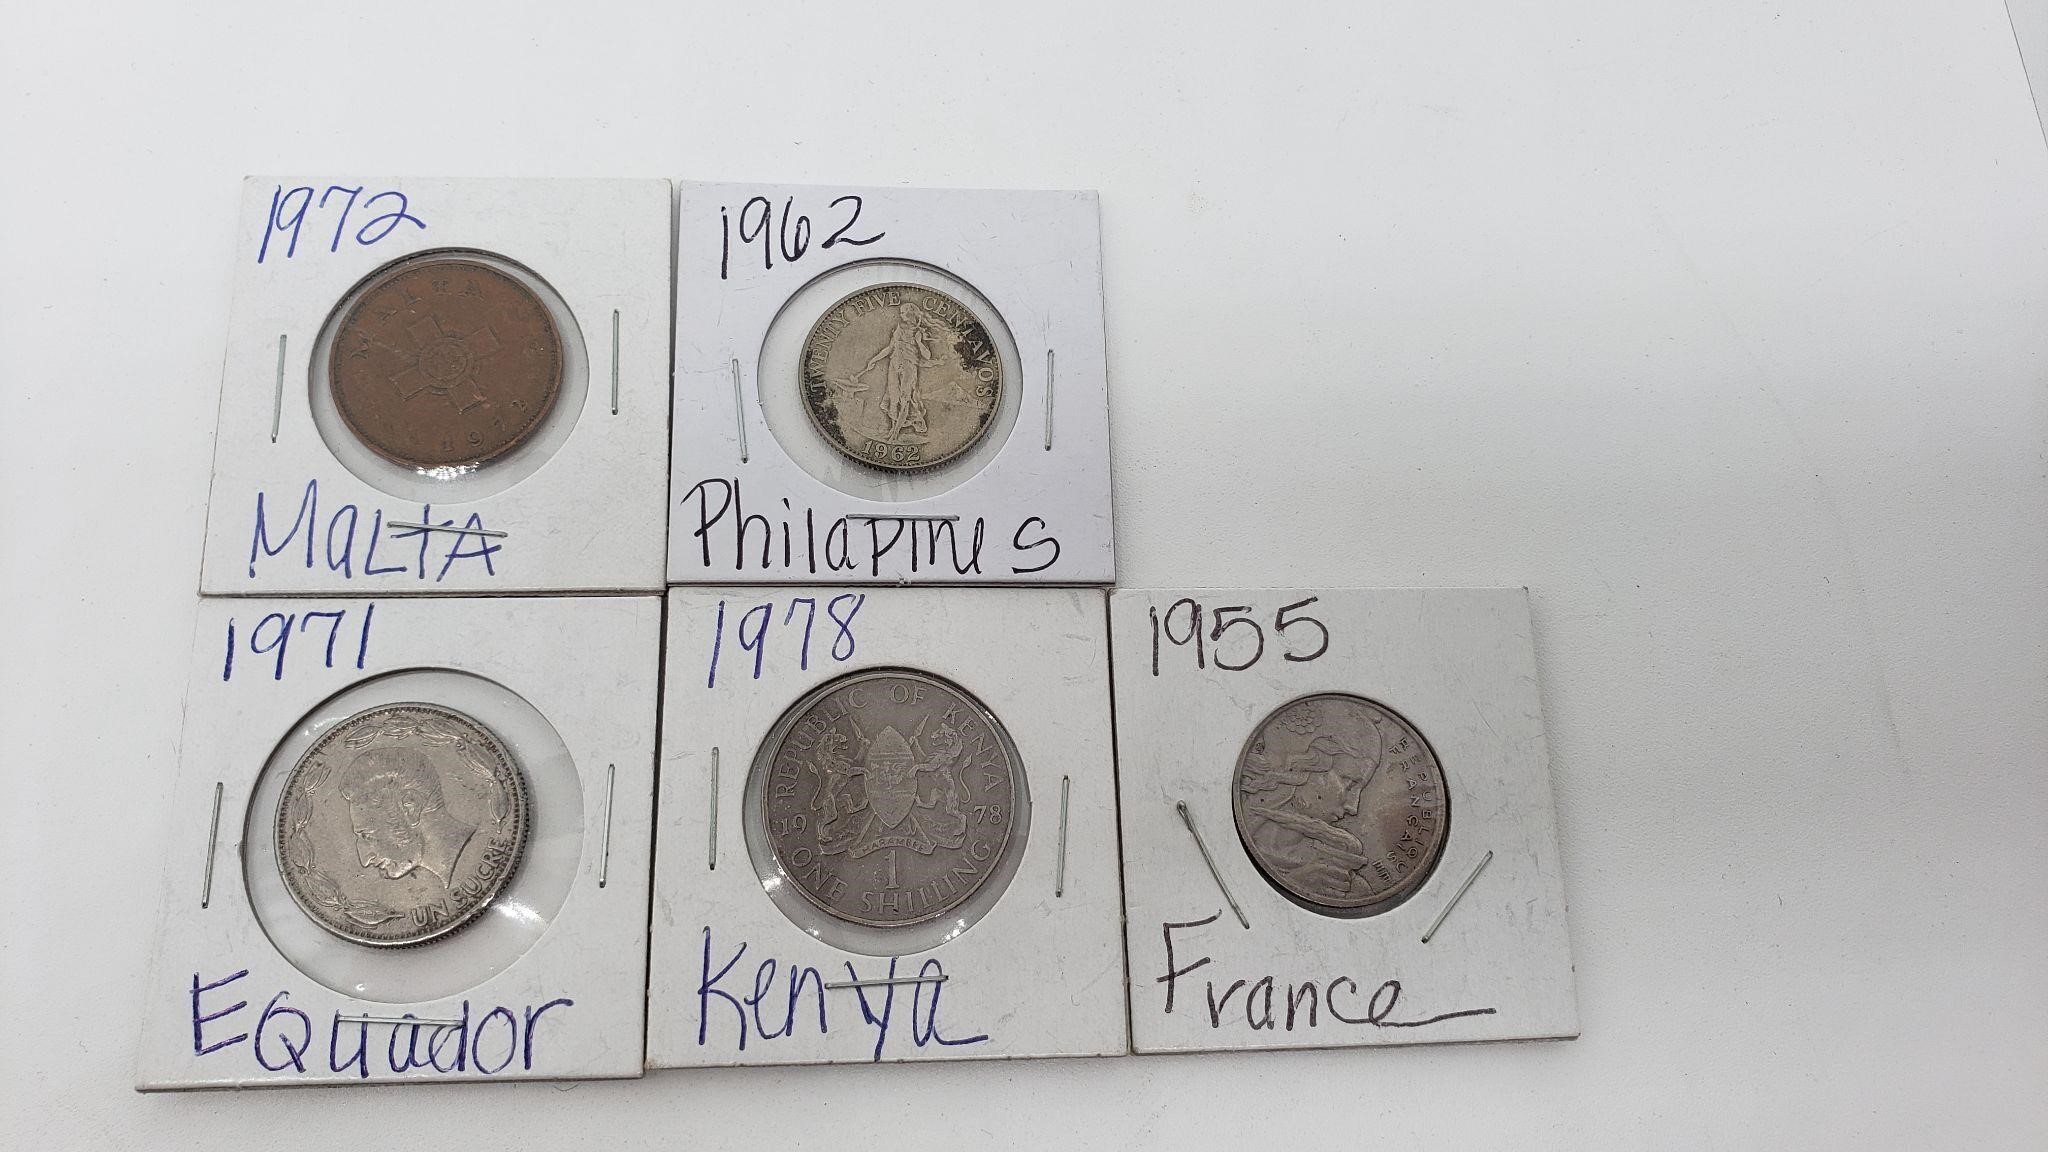 Coins Malta, Philippines, Equador, Kenya, France